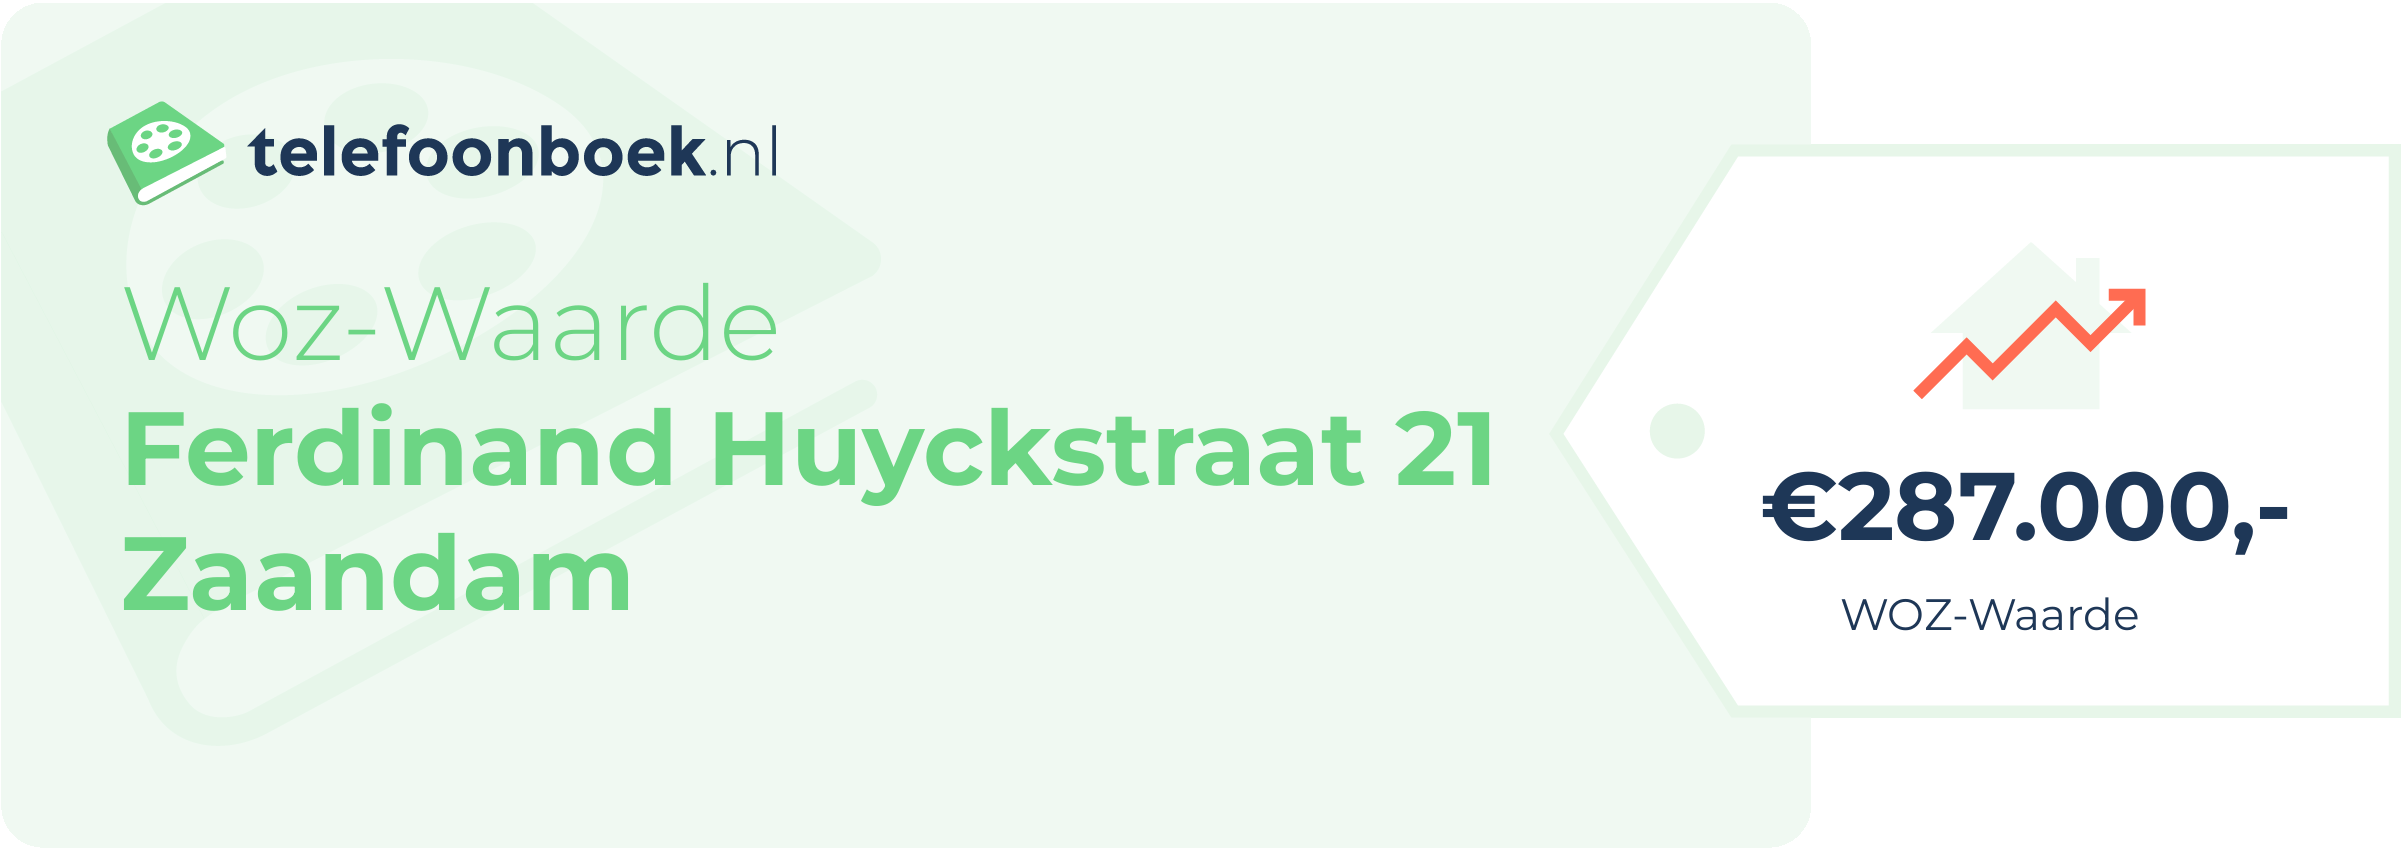 WOZ-waarde Ferdinand Huyckstraat 21 Zaandam